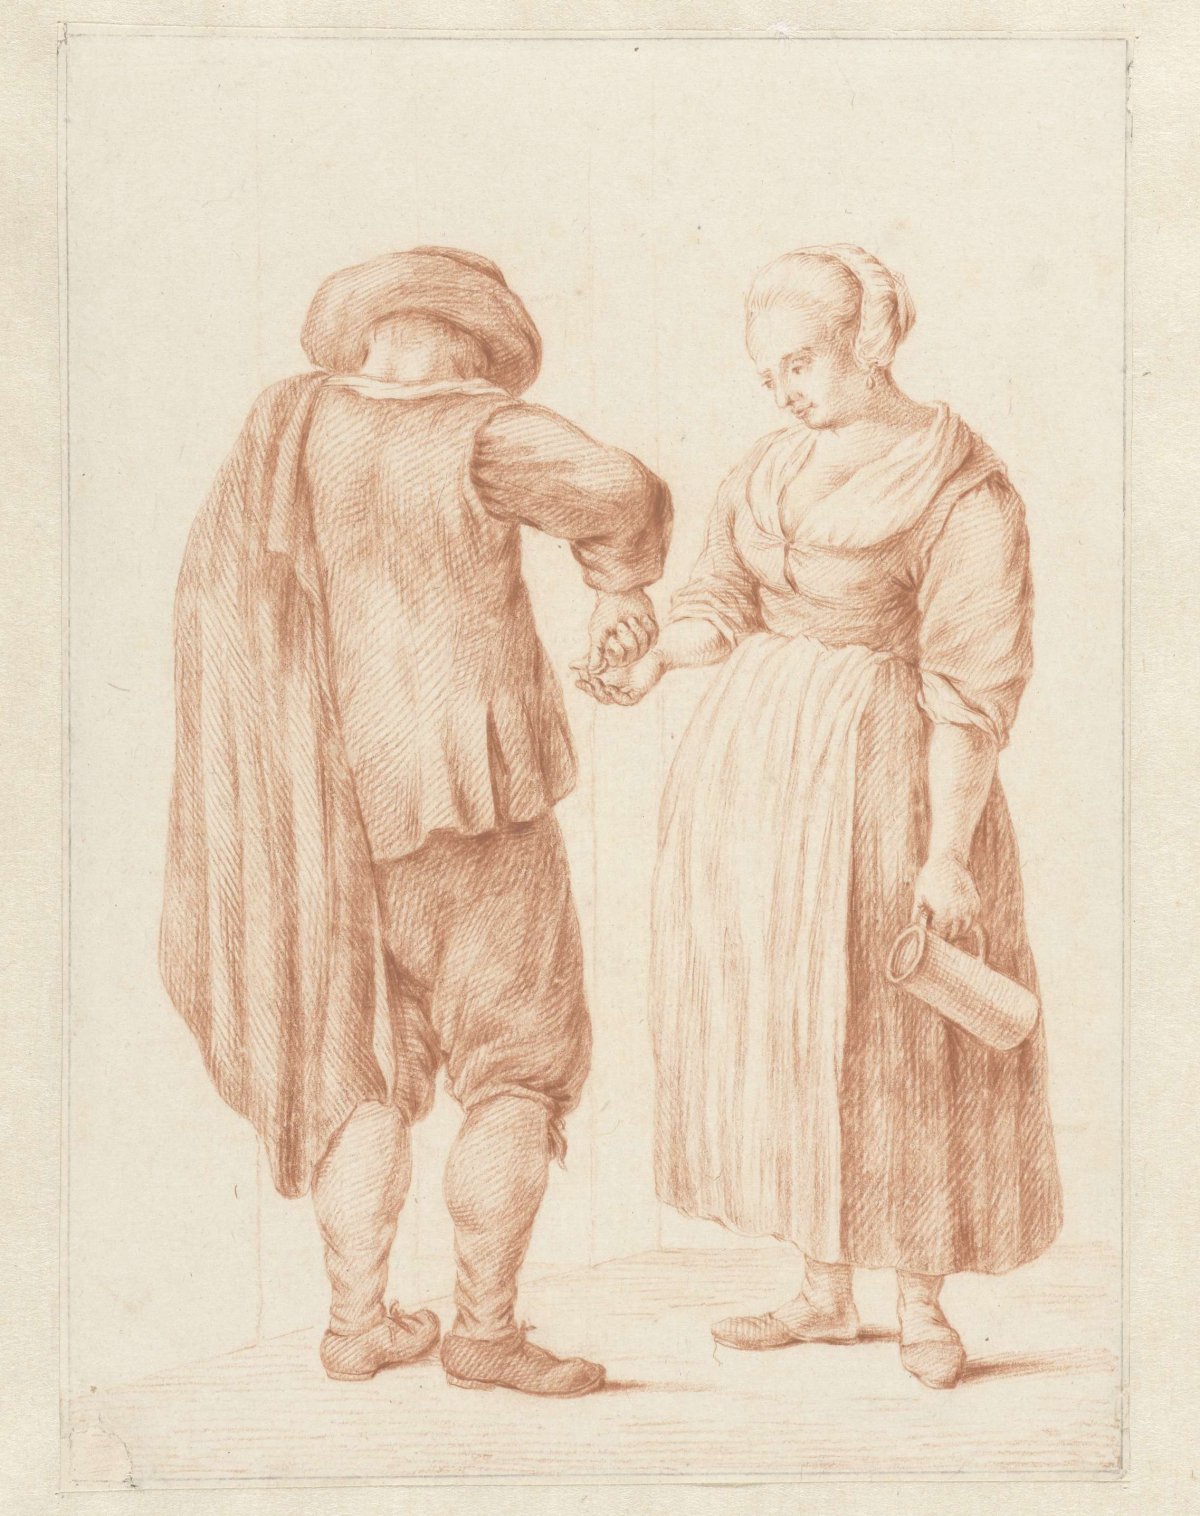 A man pays a woman, Abraham Delfos, 1741 - 1820